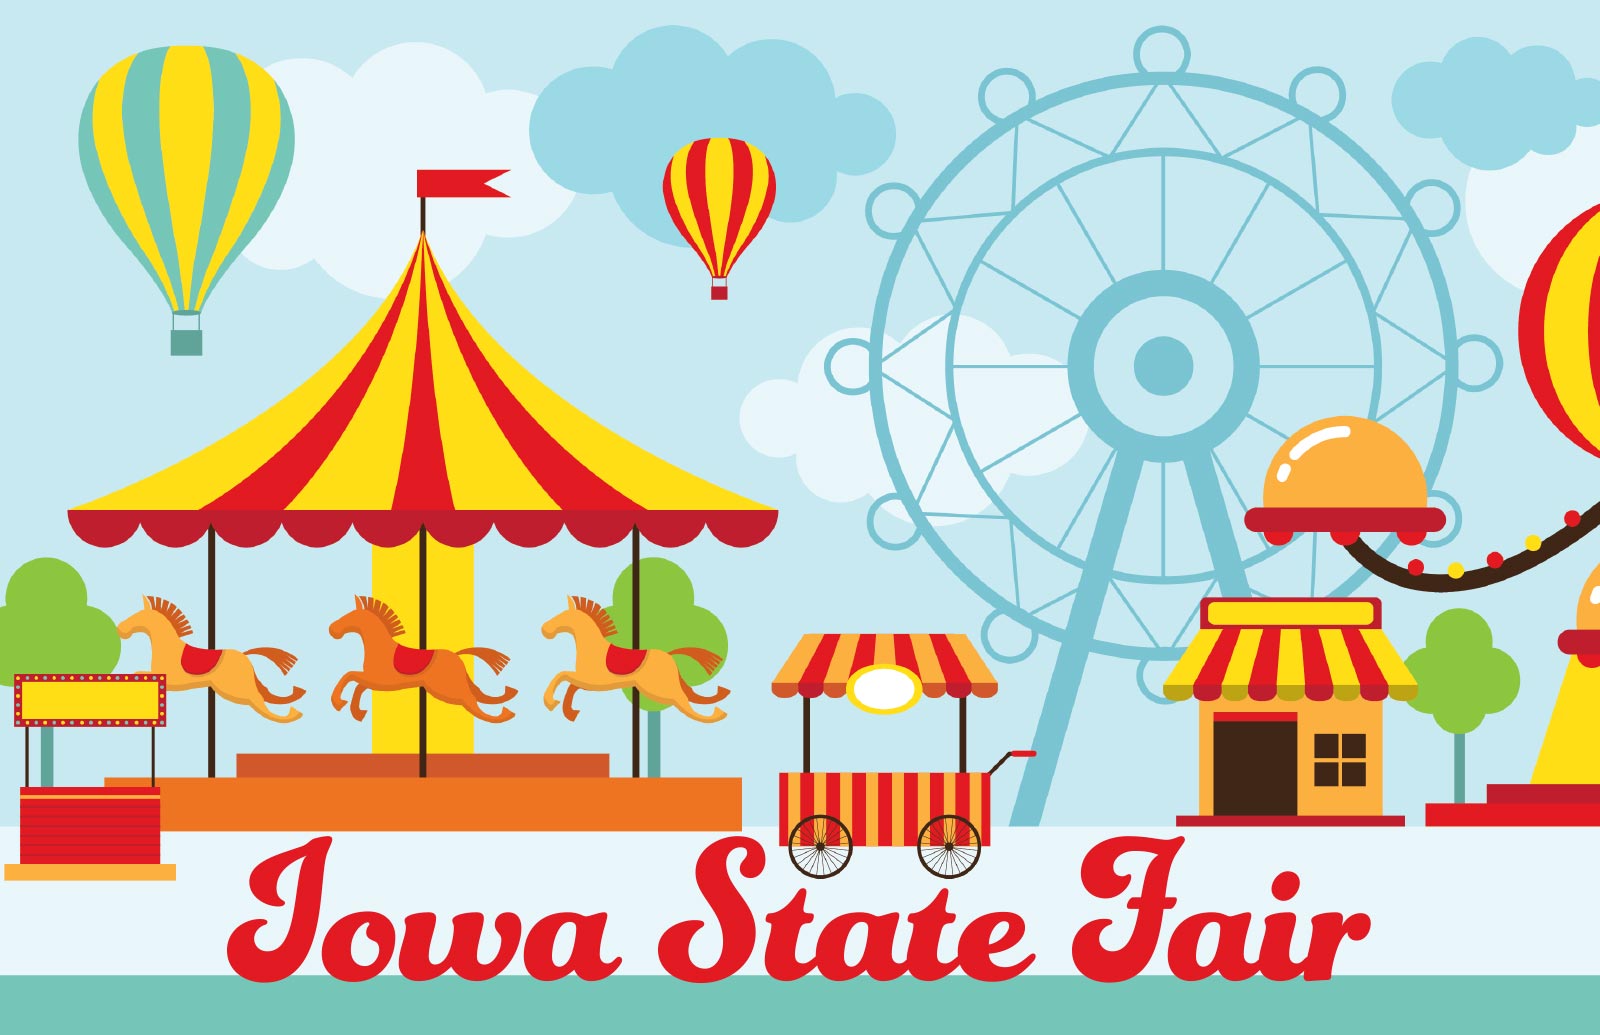 Iowa State Fair Concordia Group Delivers